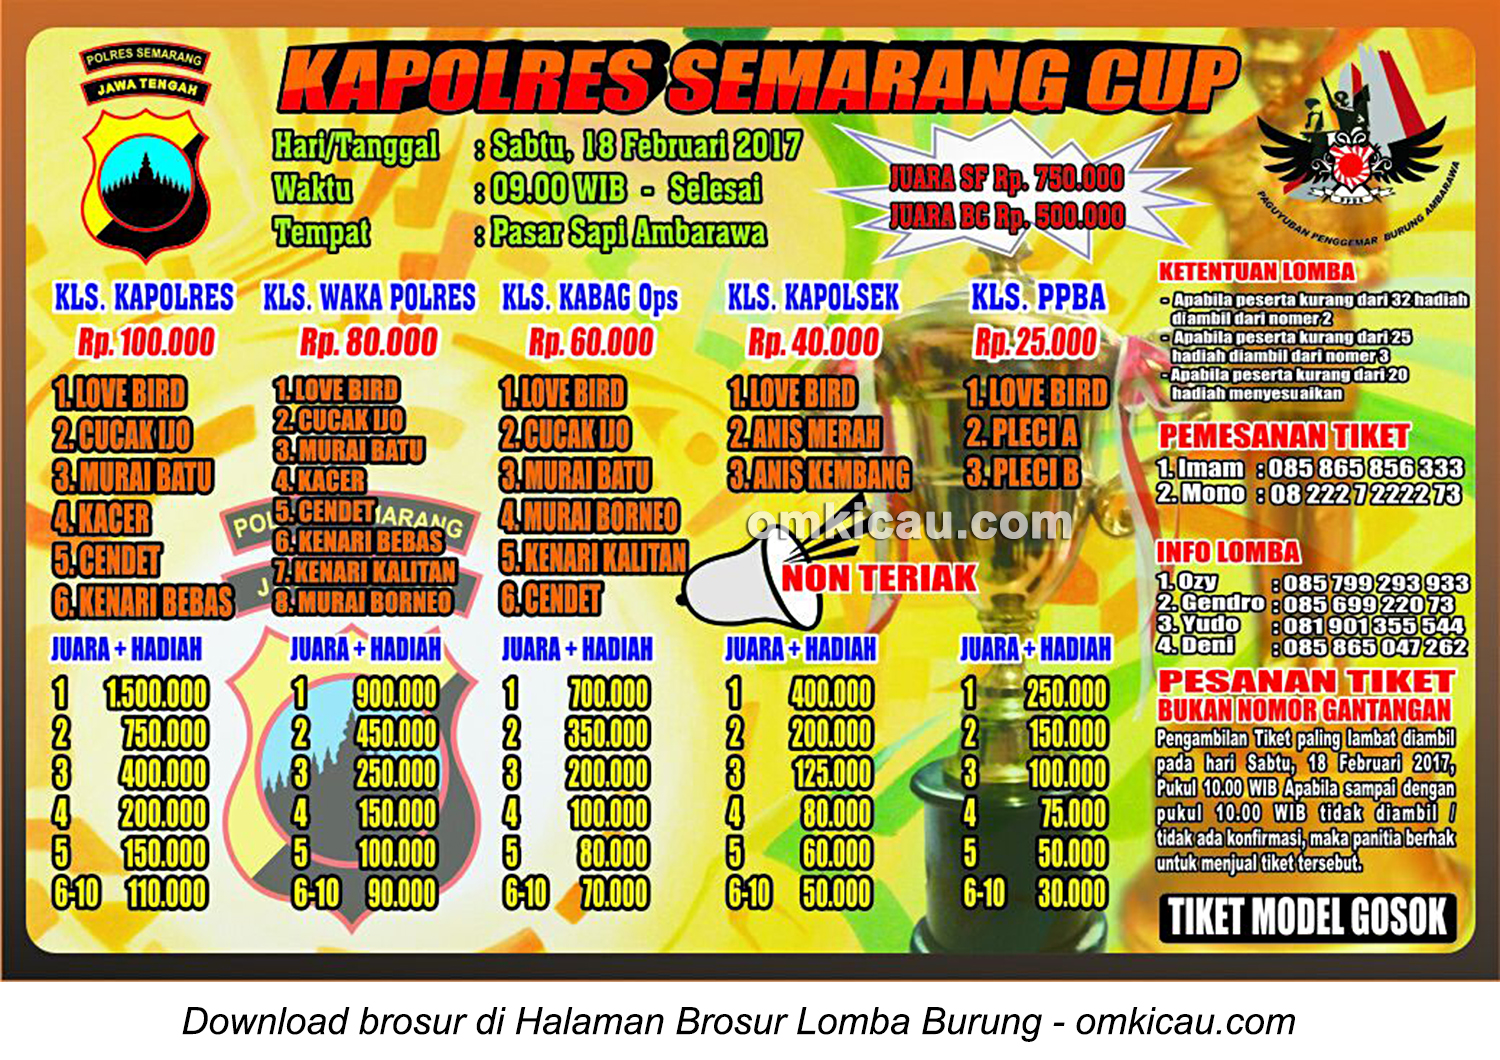 Brosur Lomba Burung Berkicau Kapolres Semarang Cup, Ambarawa, 18 Februari 2017